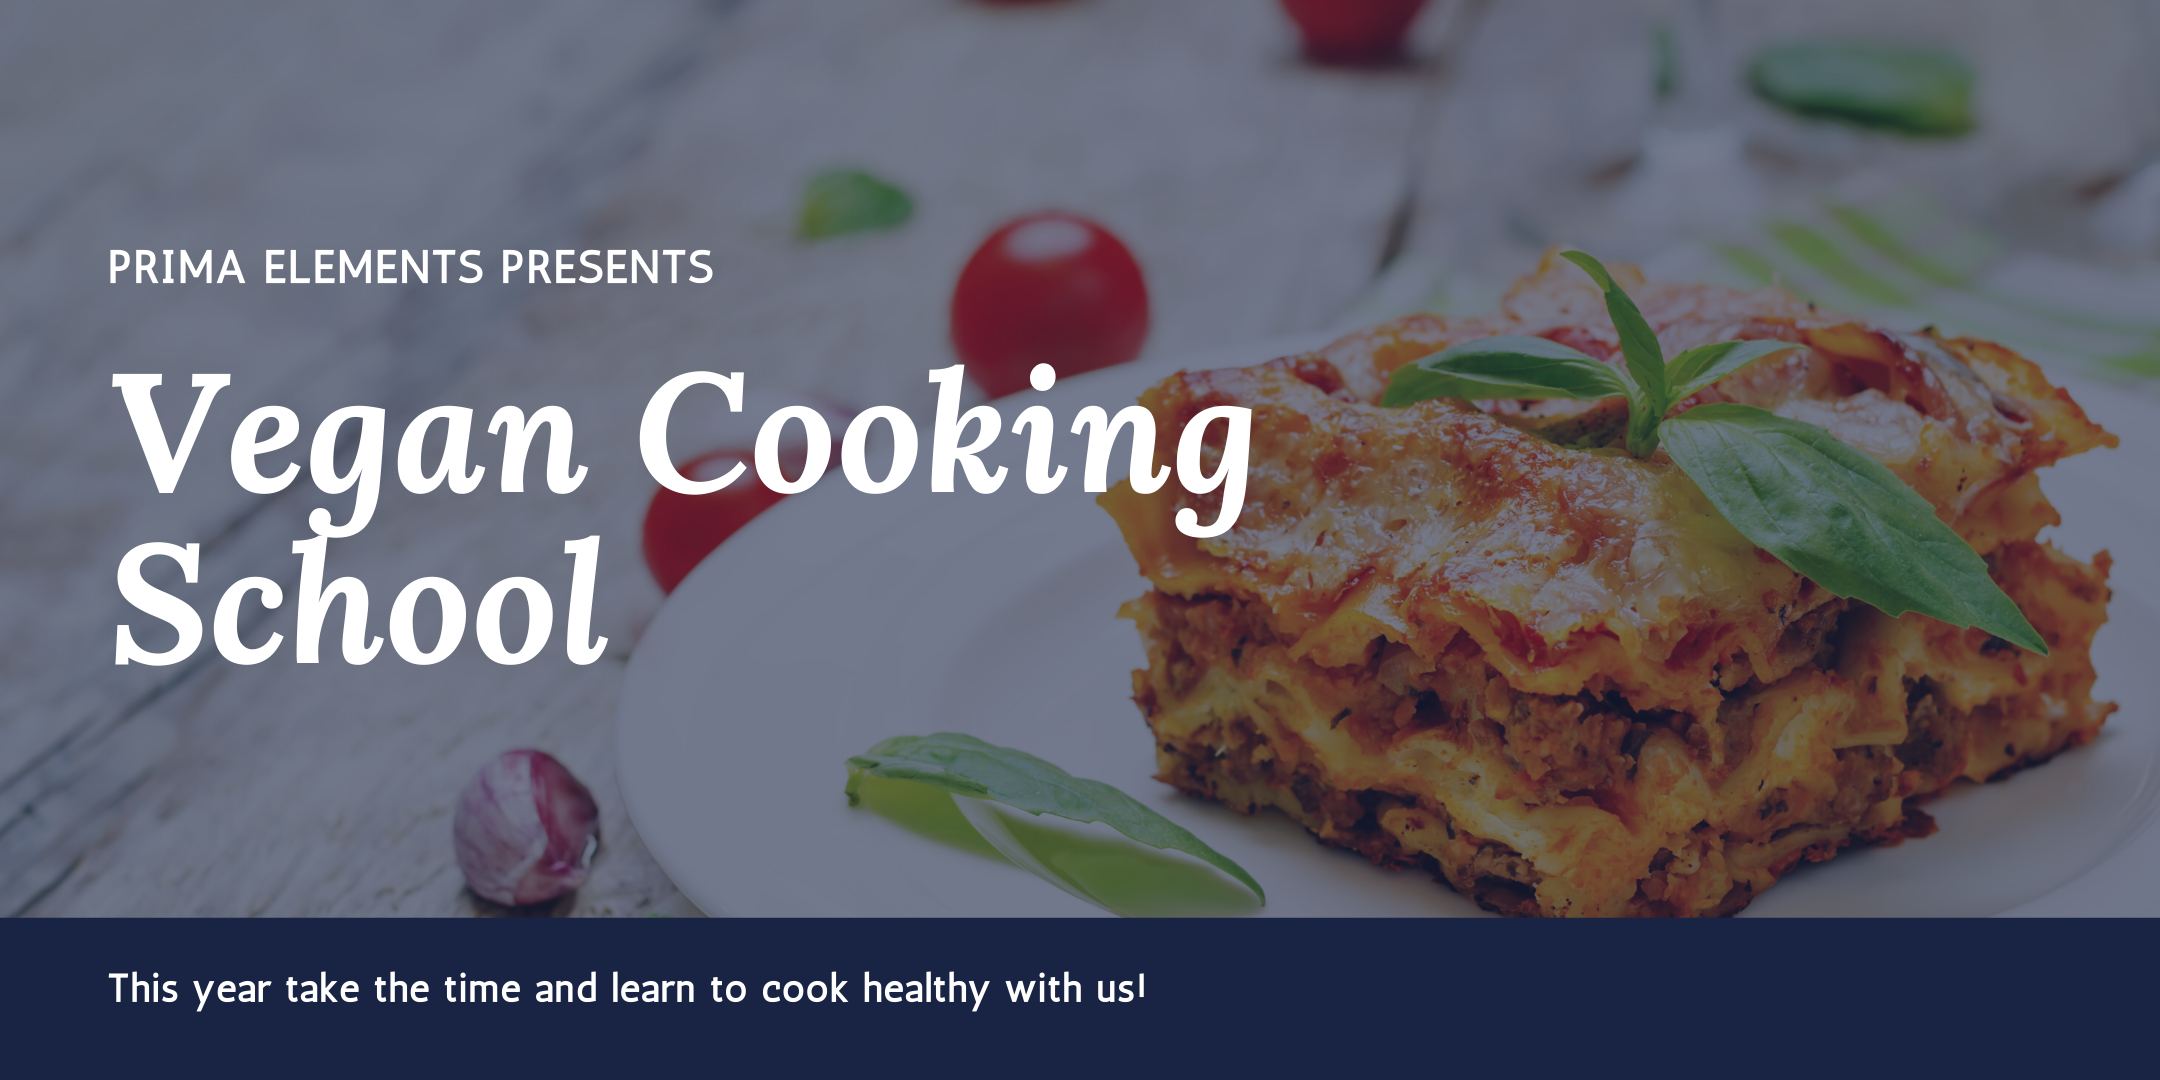 Vegan Cooking School - Learn to cook healthy!